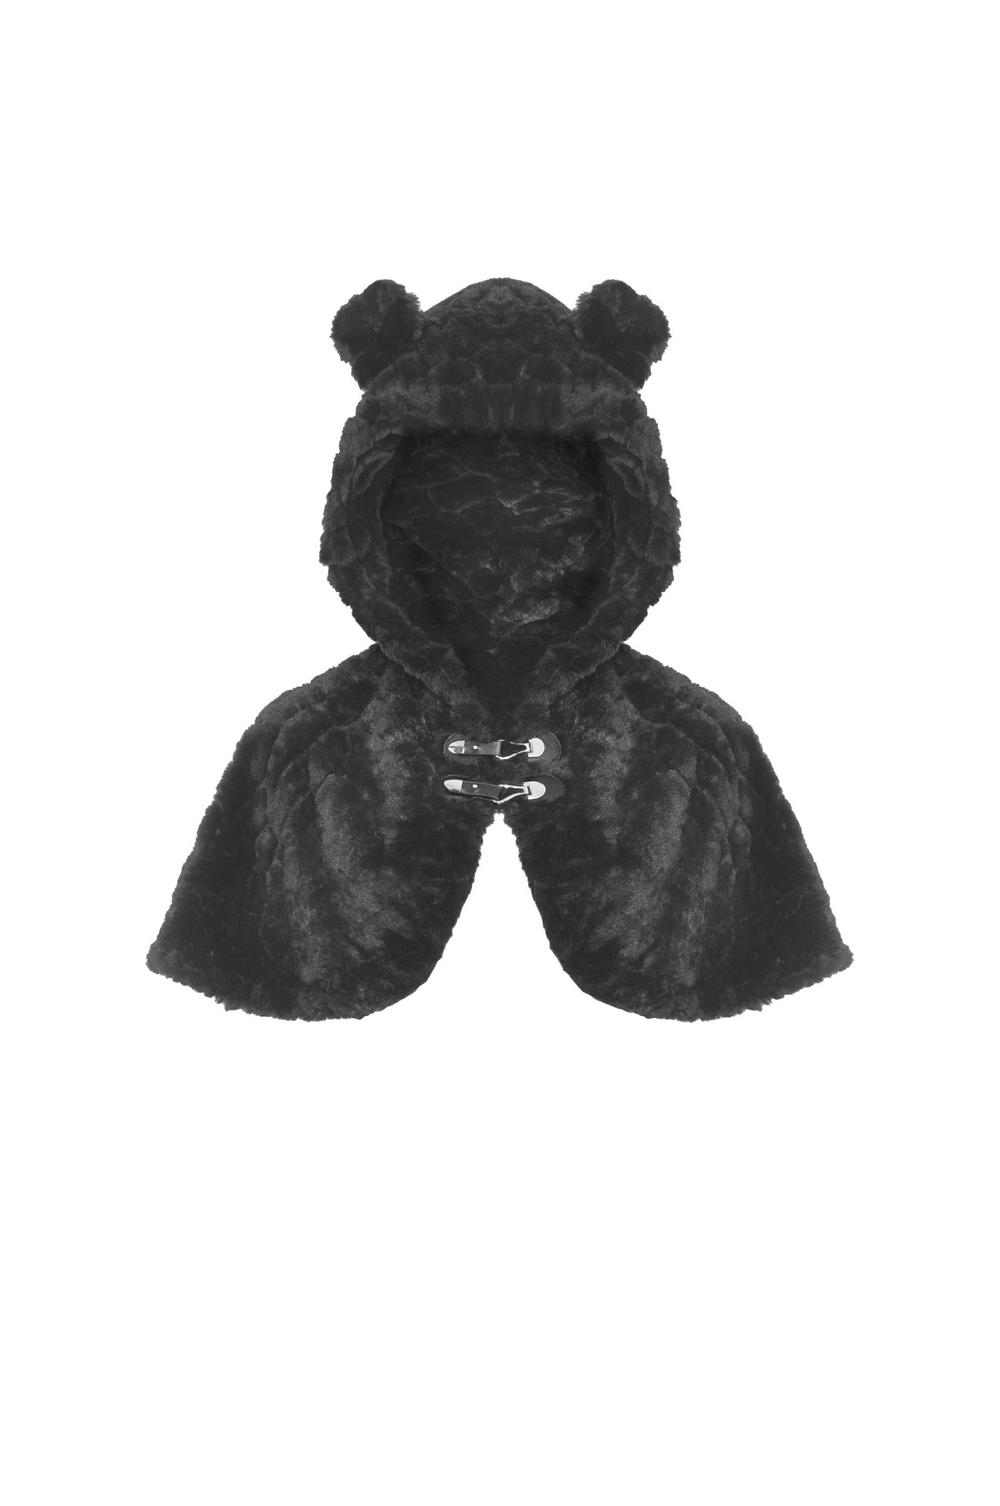 Black Teddy Bear Hooded Cape - Warm and Stylish